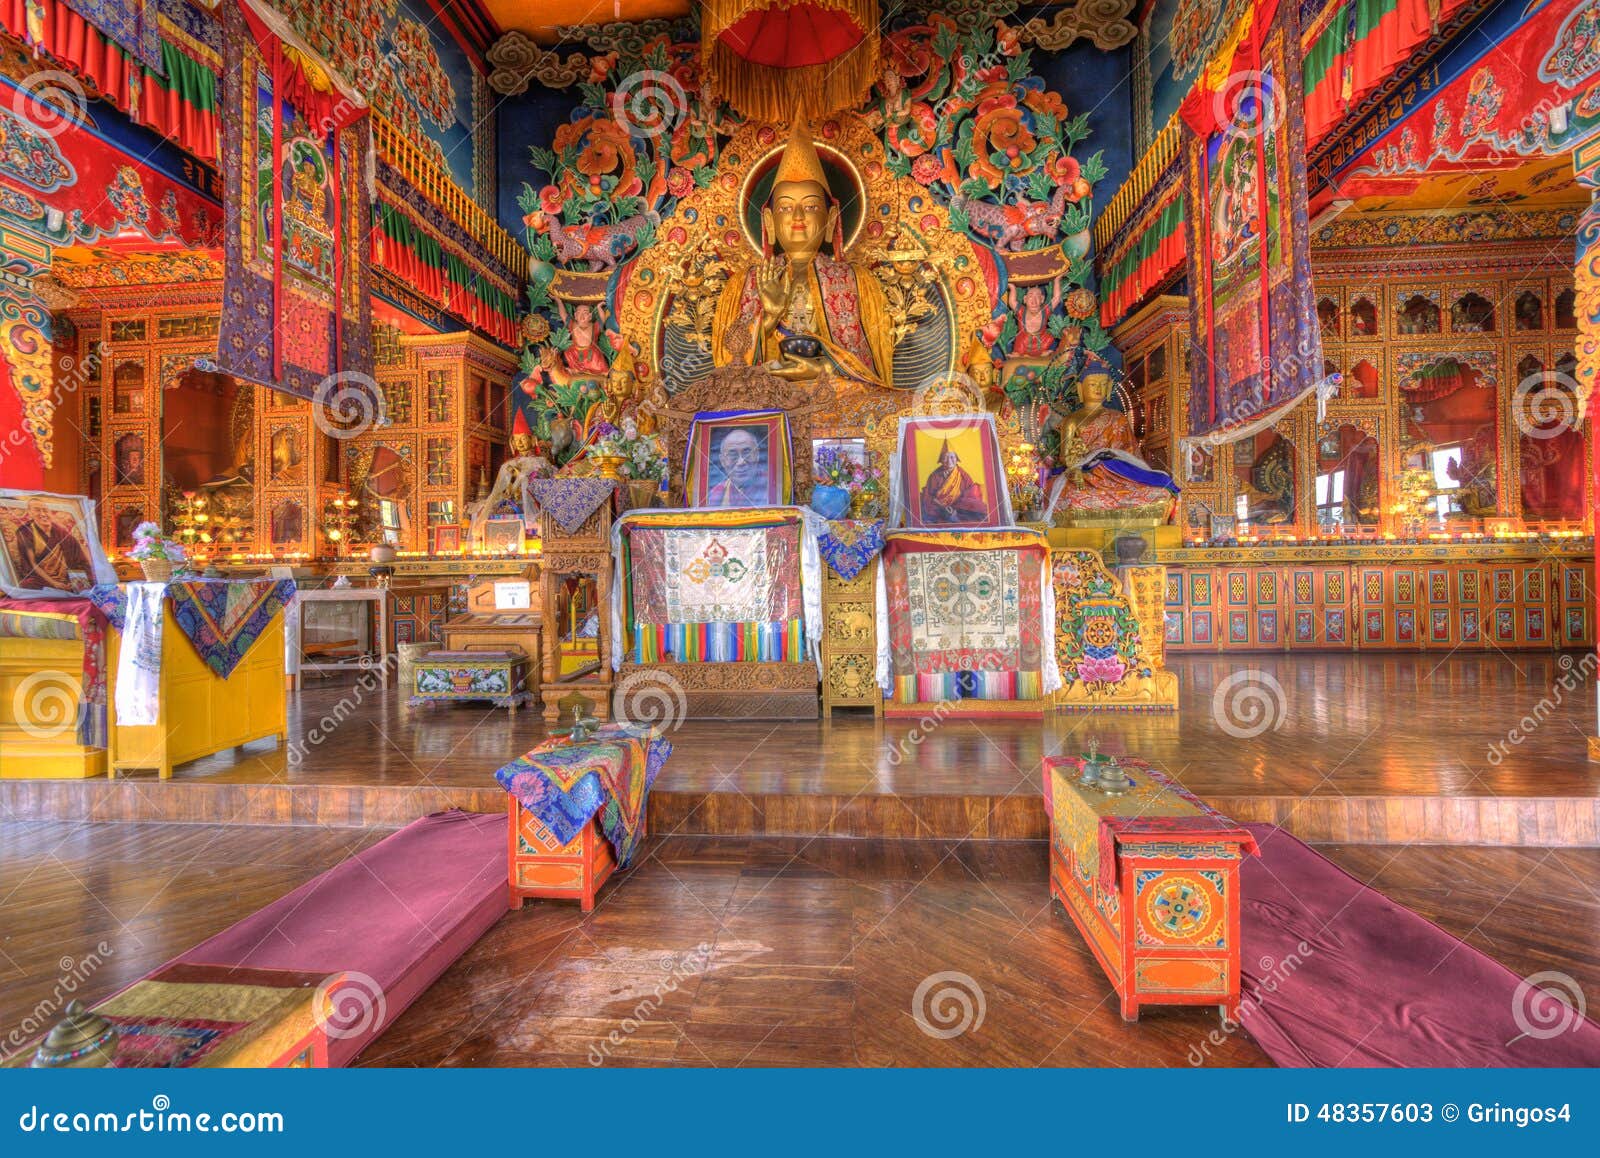 kopan monastery located near kathmandu